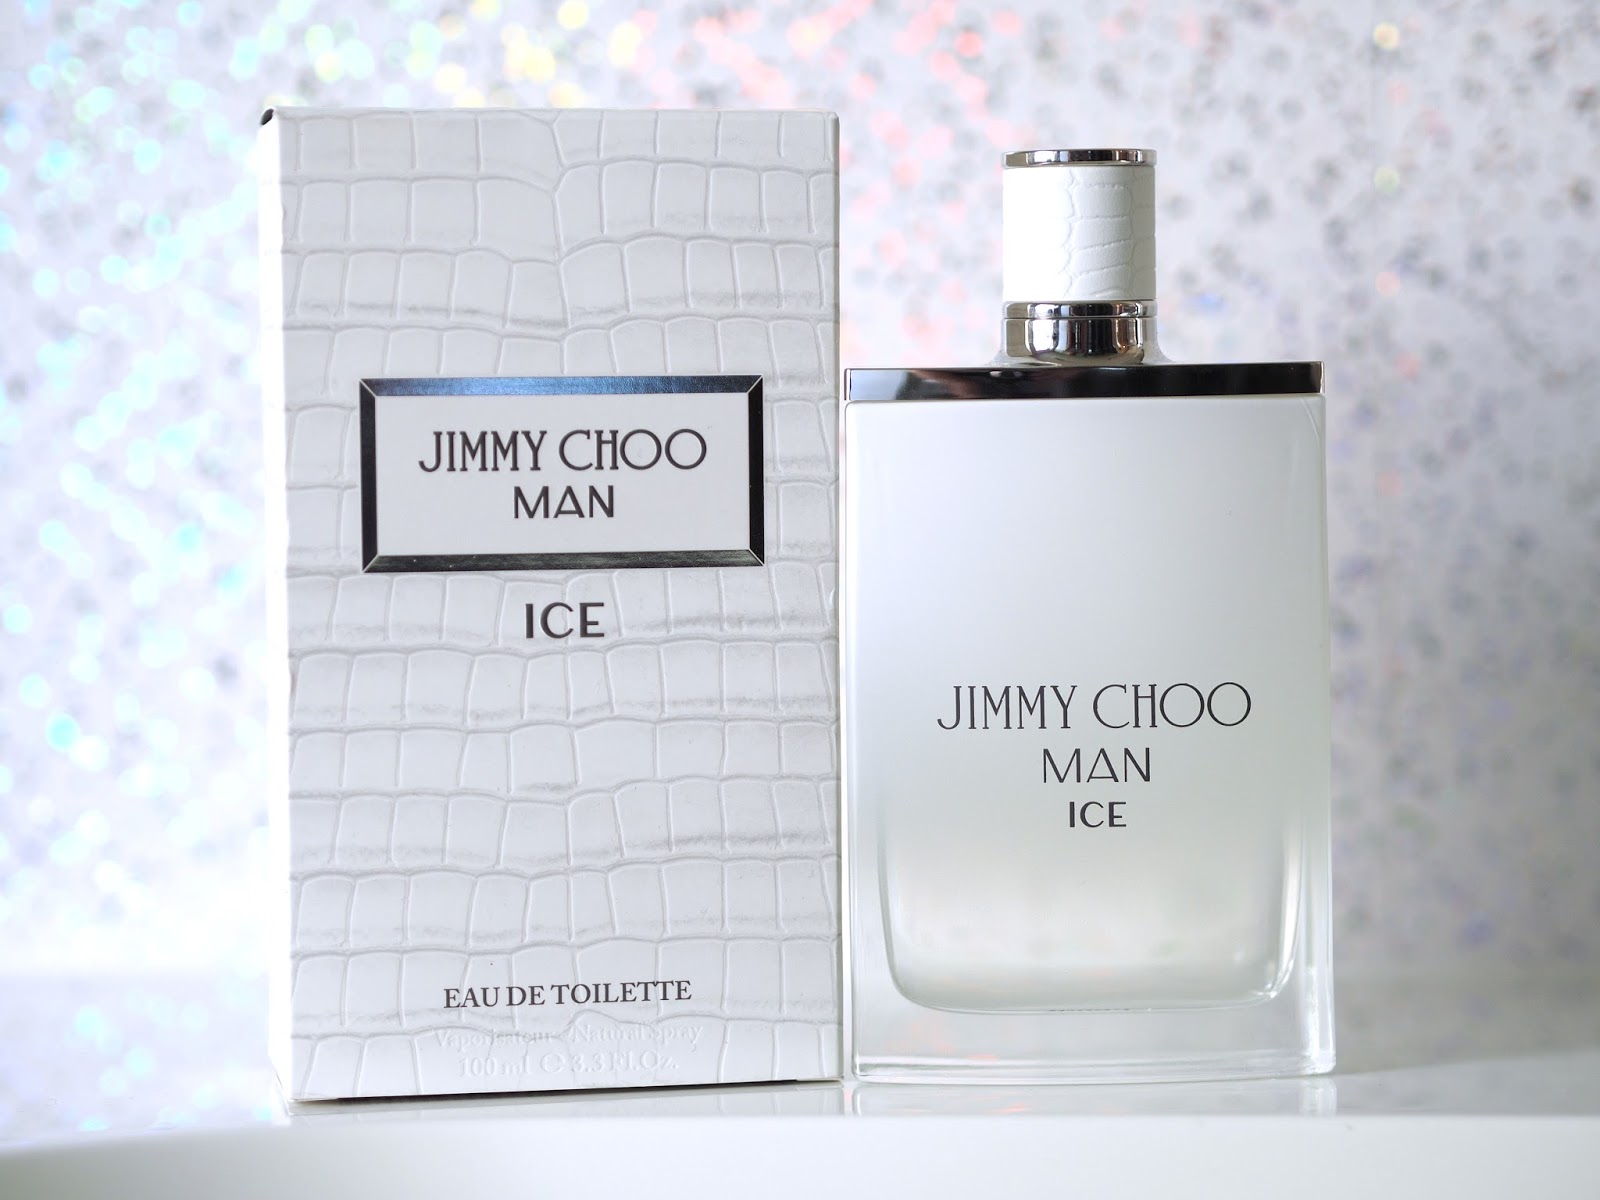 Jimmy Choo Man Ice kutu şişe derimsi benzetme.jpg